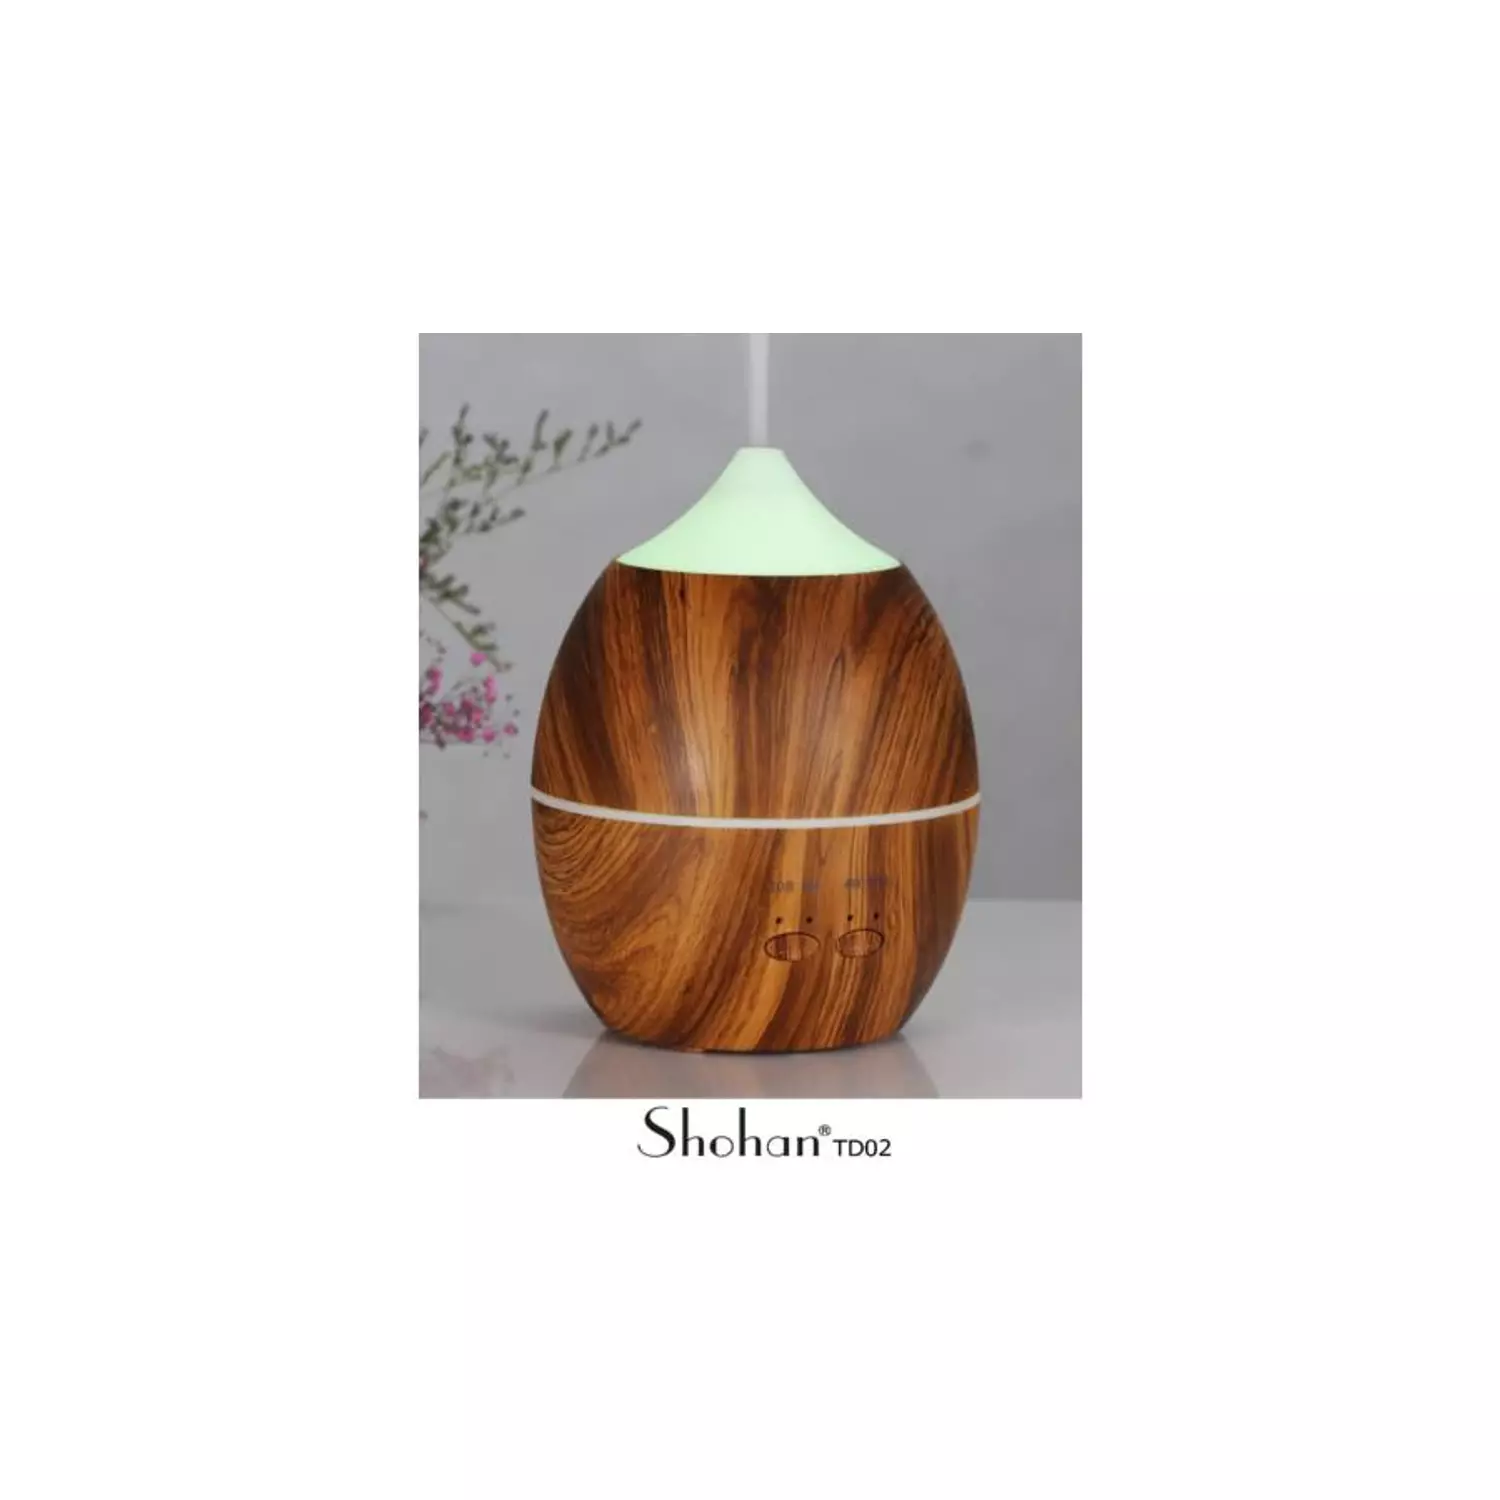 Shohan TD 02 ultrahangos aroma diffúzor, sötét fa színű